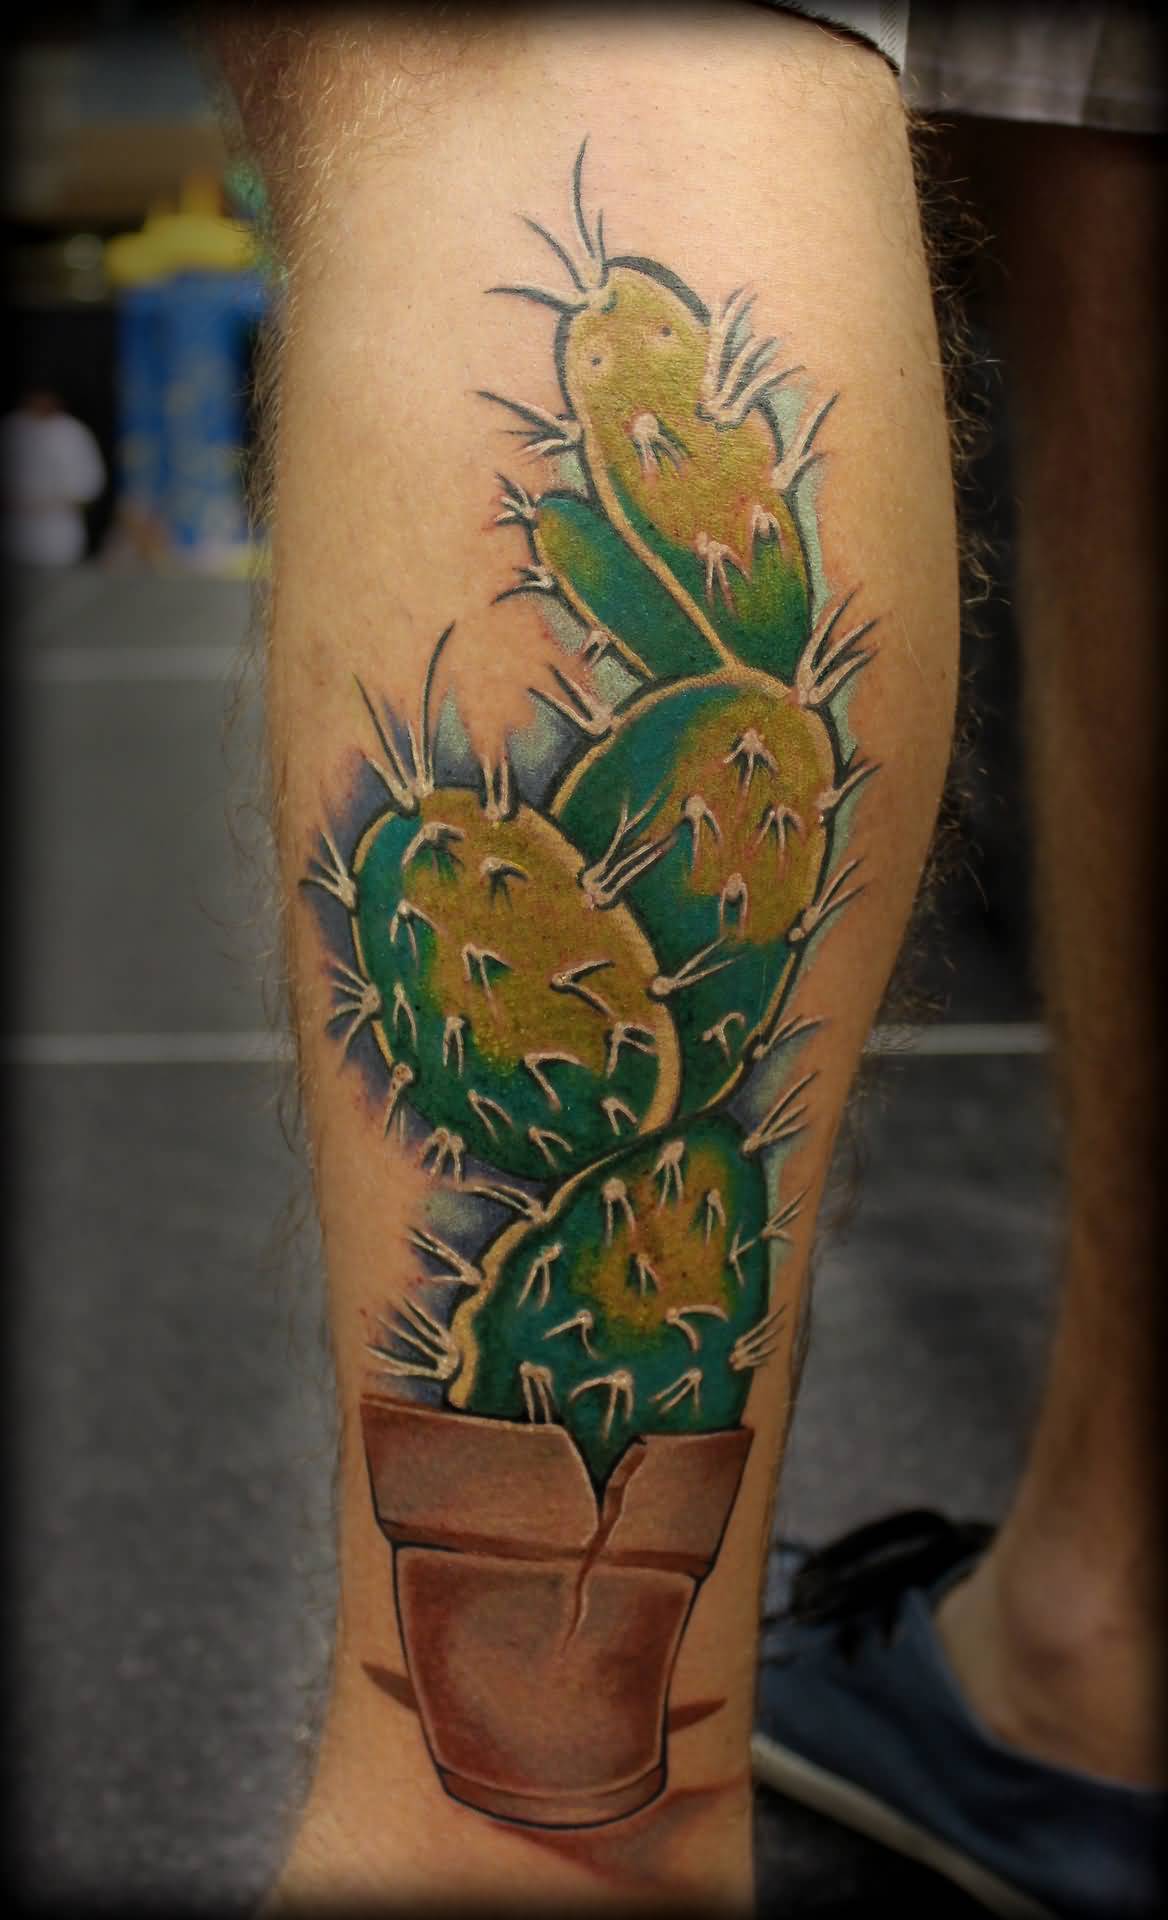 Incredible Cactus In Broken Pot Tattoo On Leg